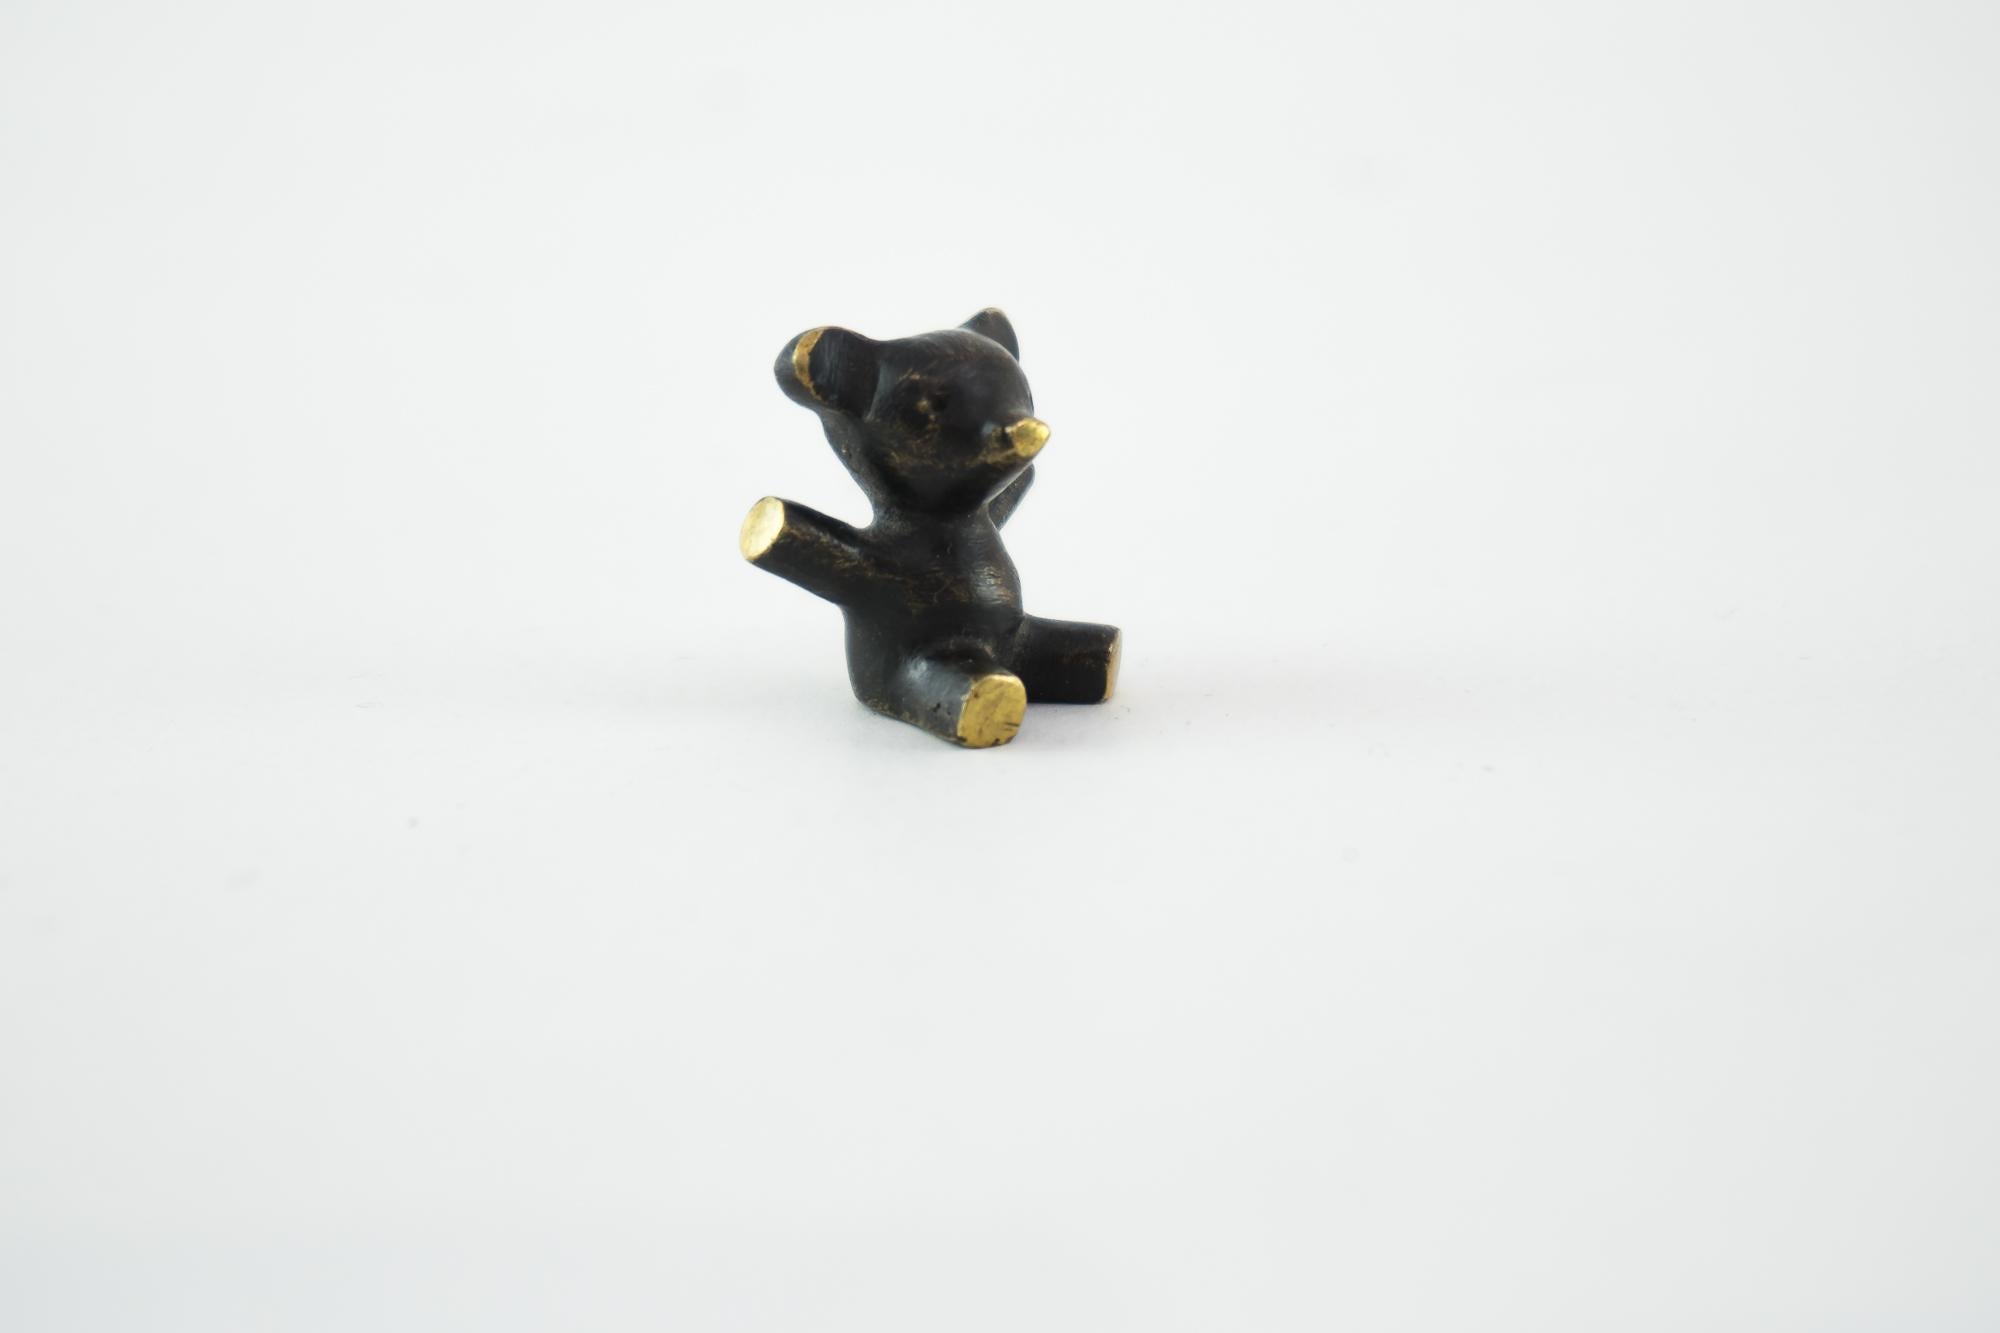 Small Walter Bosse bear figurine, Vienna, circa 1950s
Original condition.